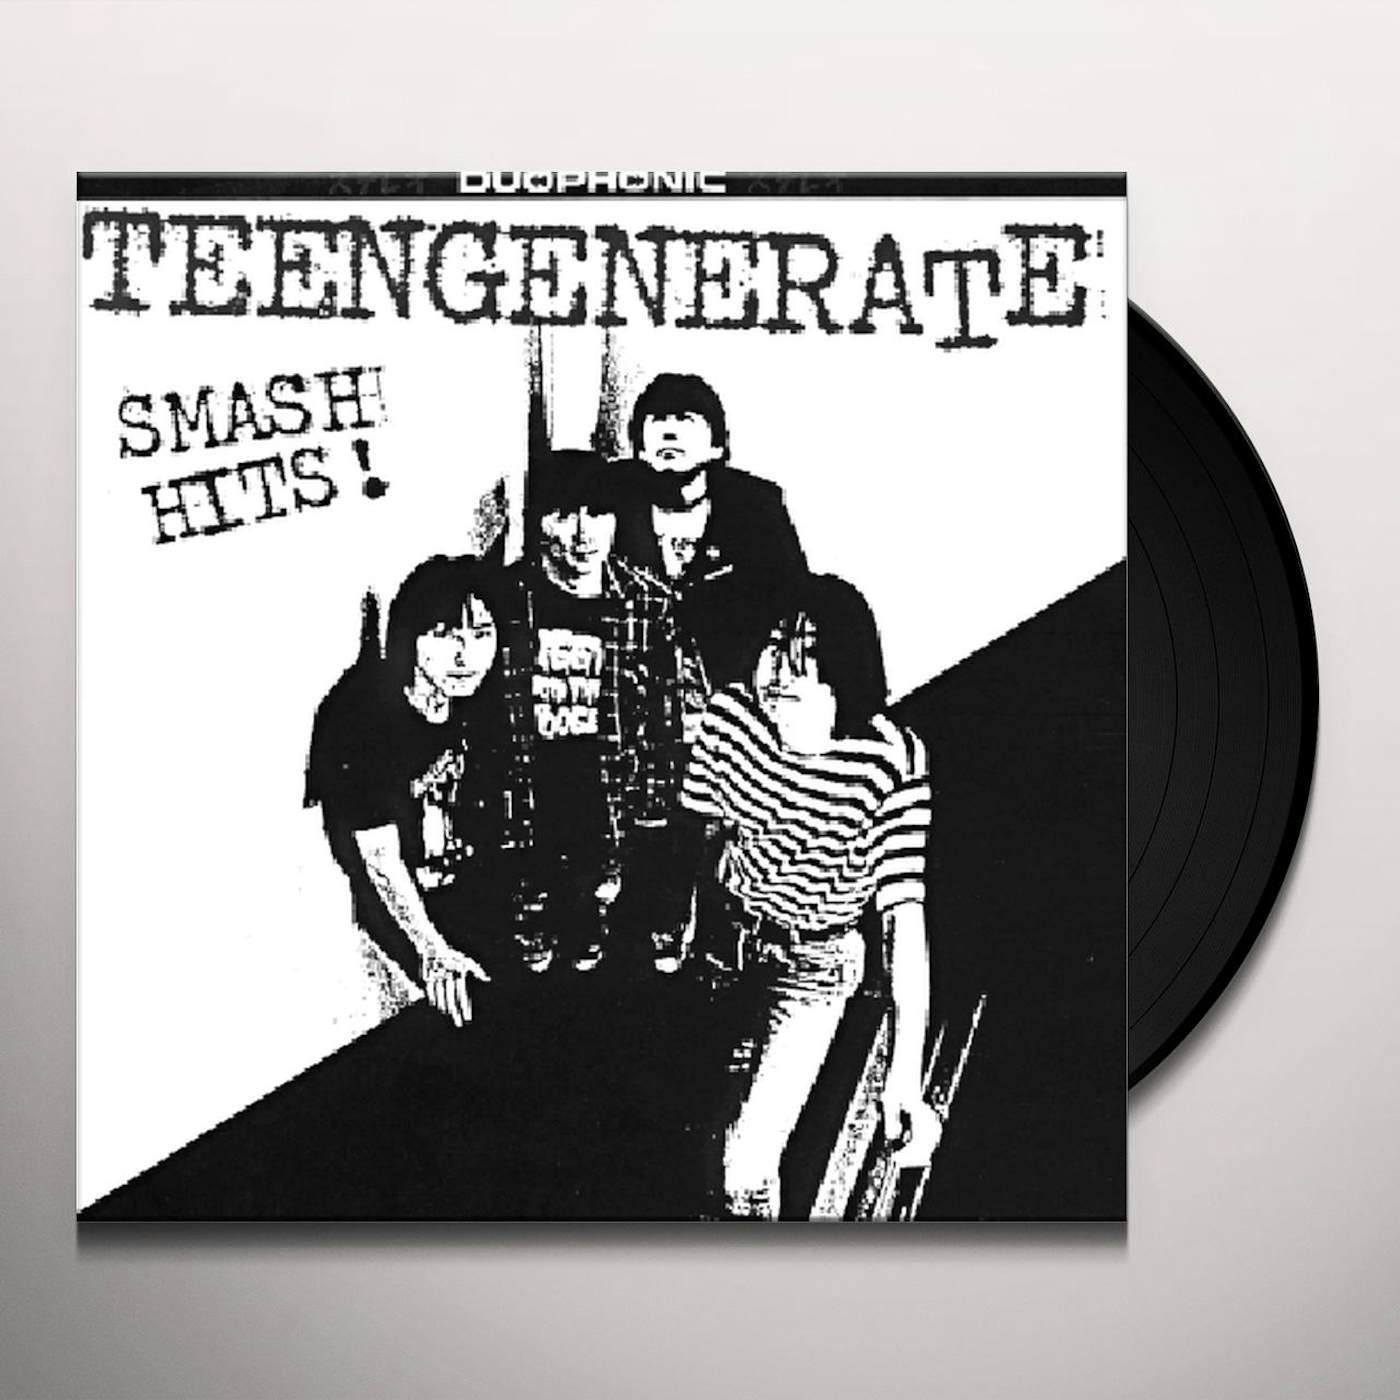 Teengenerate SMASH HITS Vinyl Record